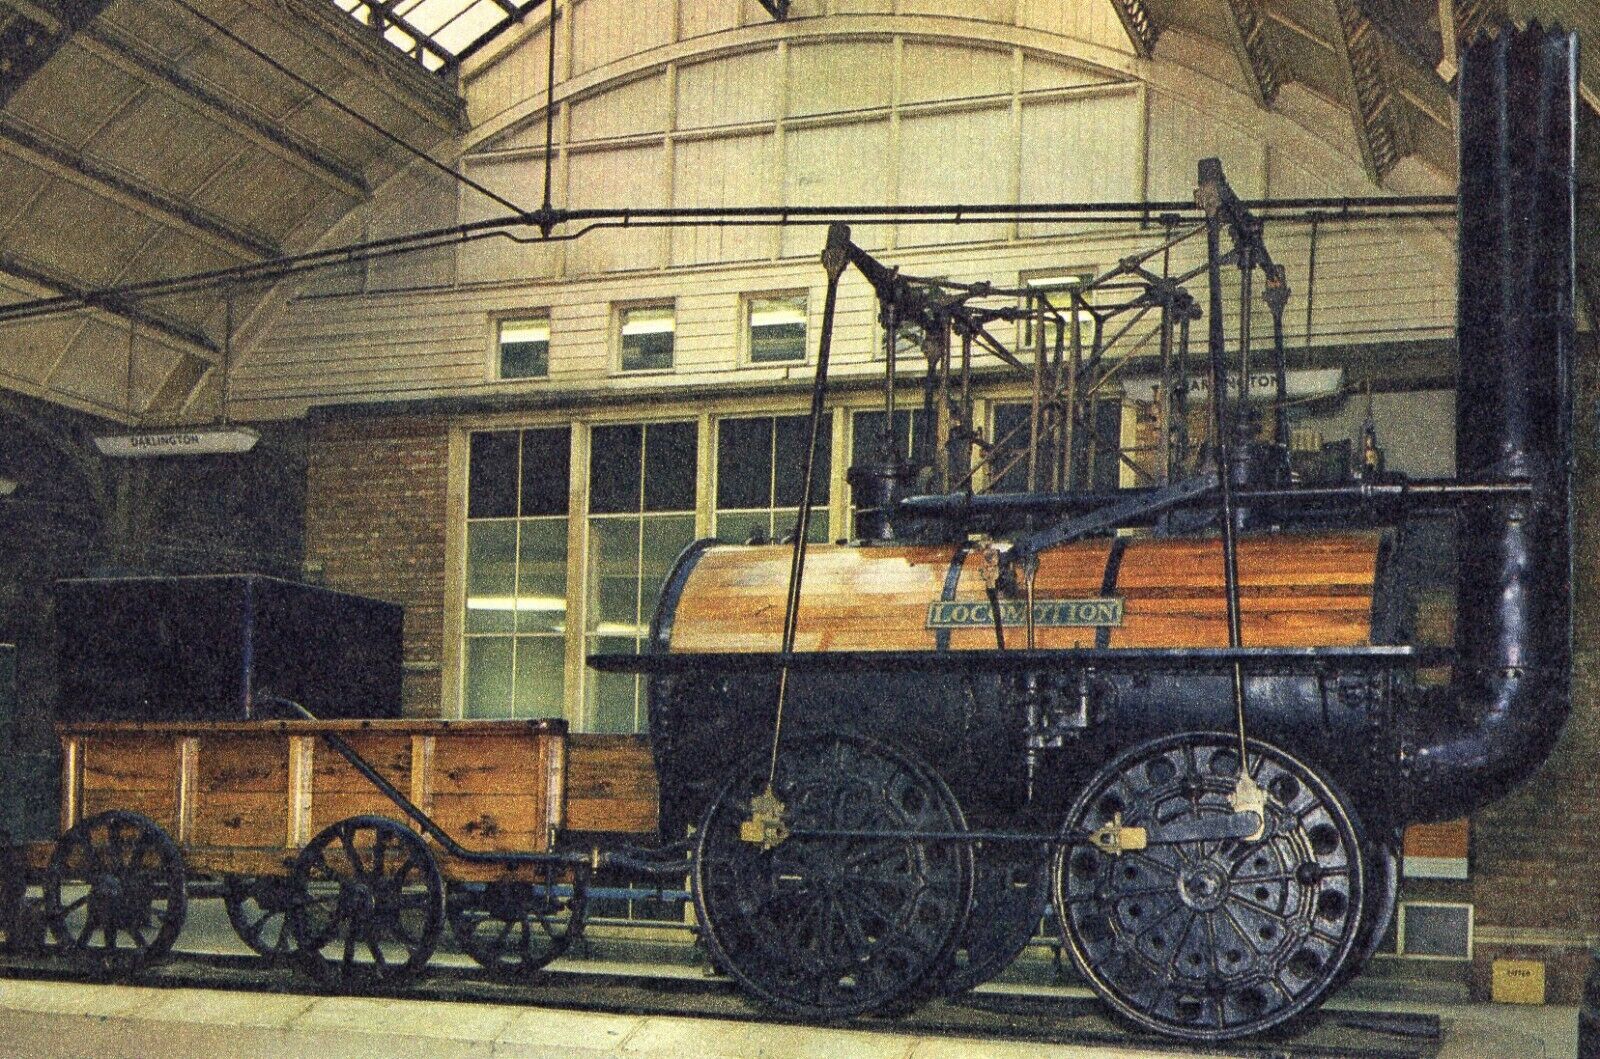 House Clearance - Service Railway Locomotion at Darlington Railway Station J Arthur Dixon T.6333